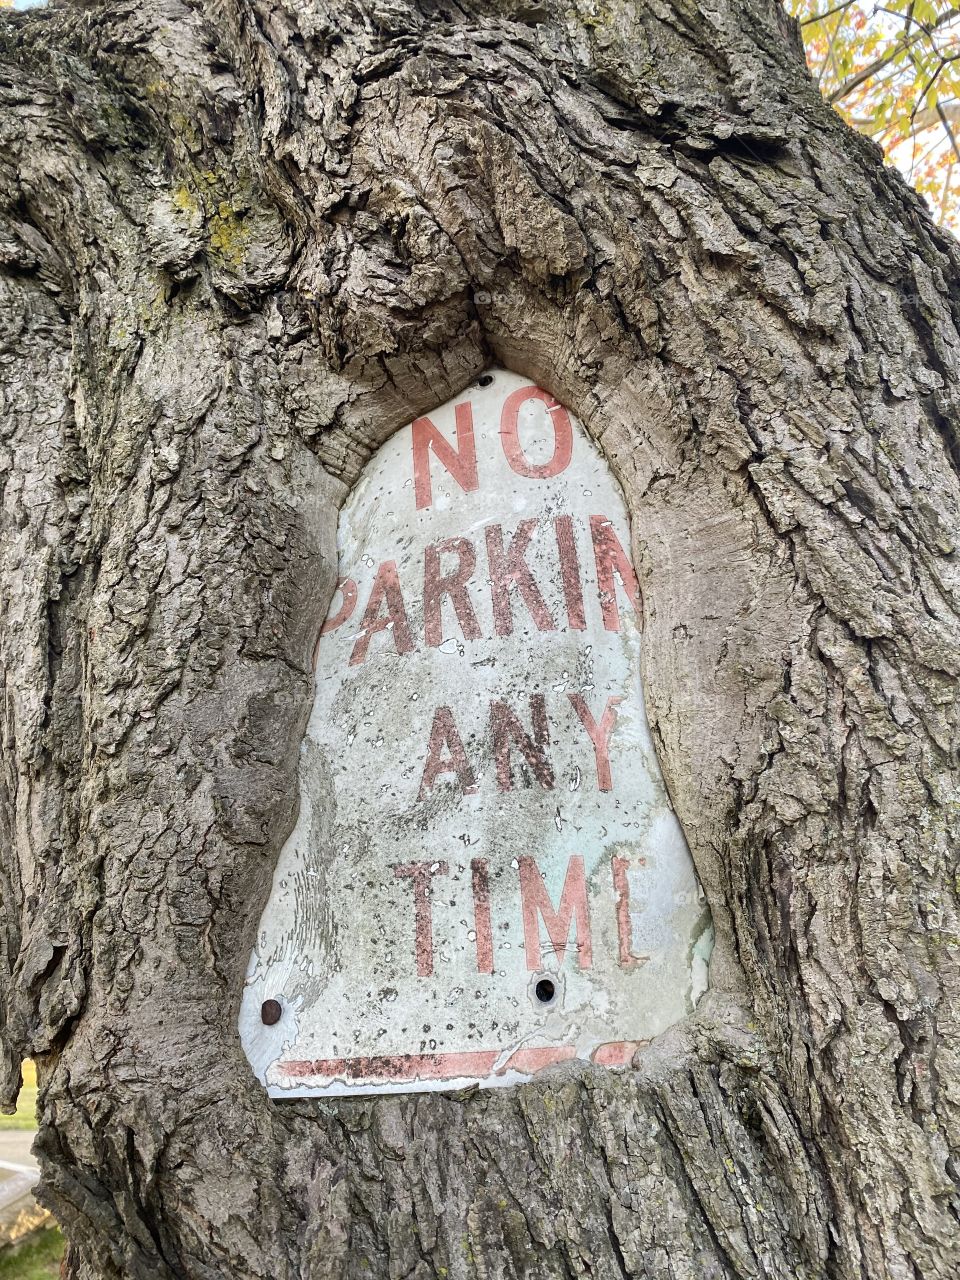 No parking sign